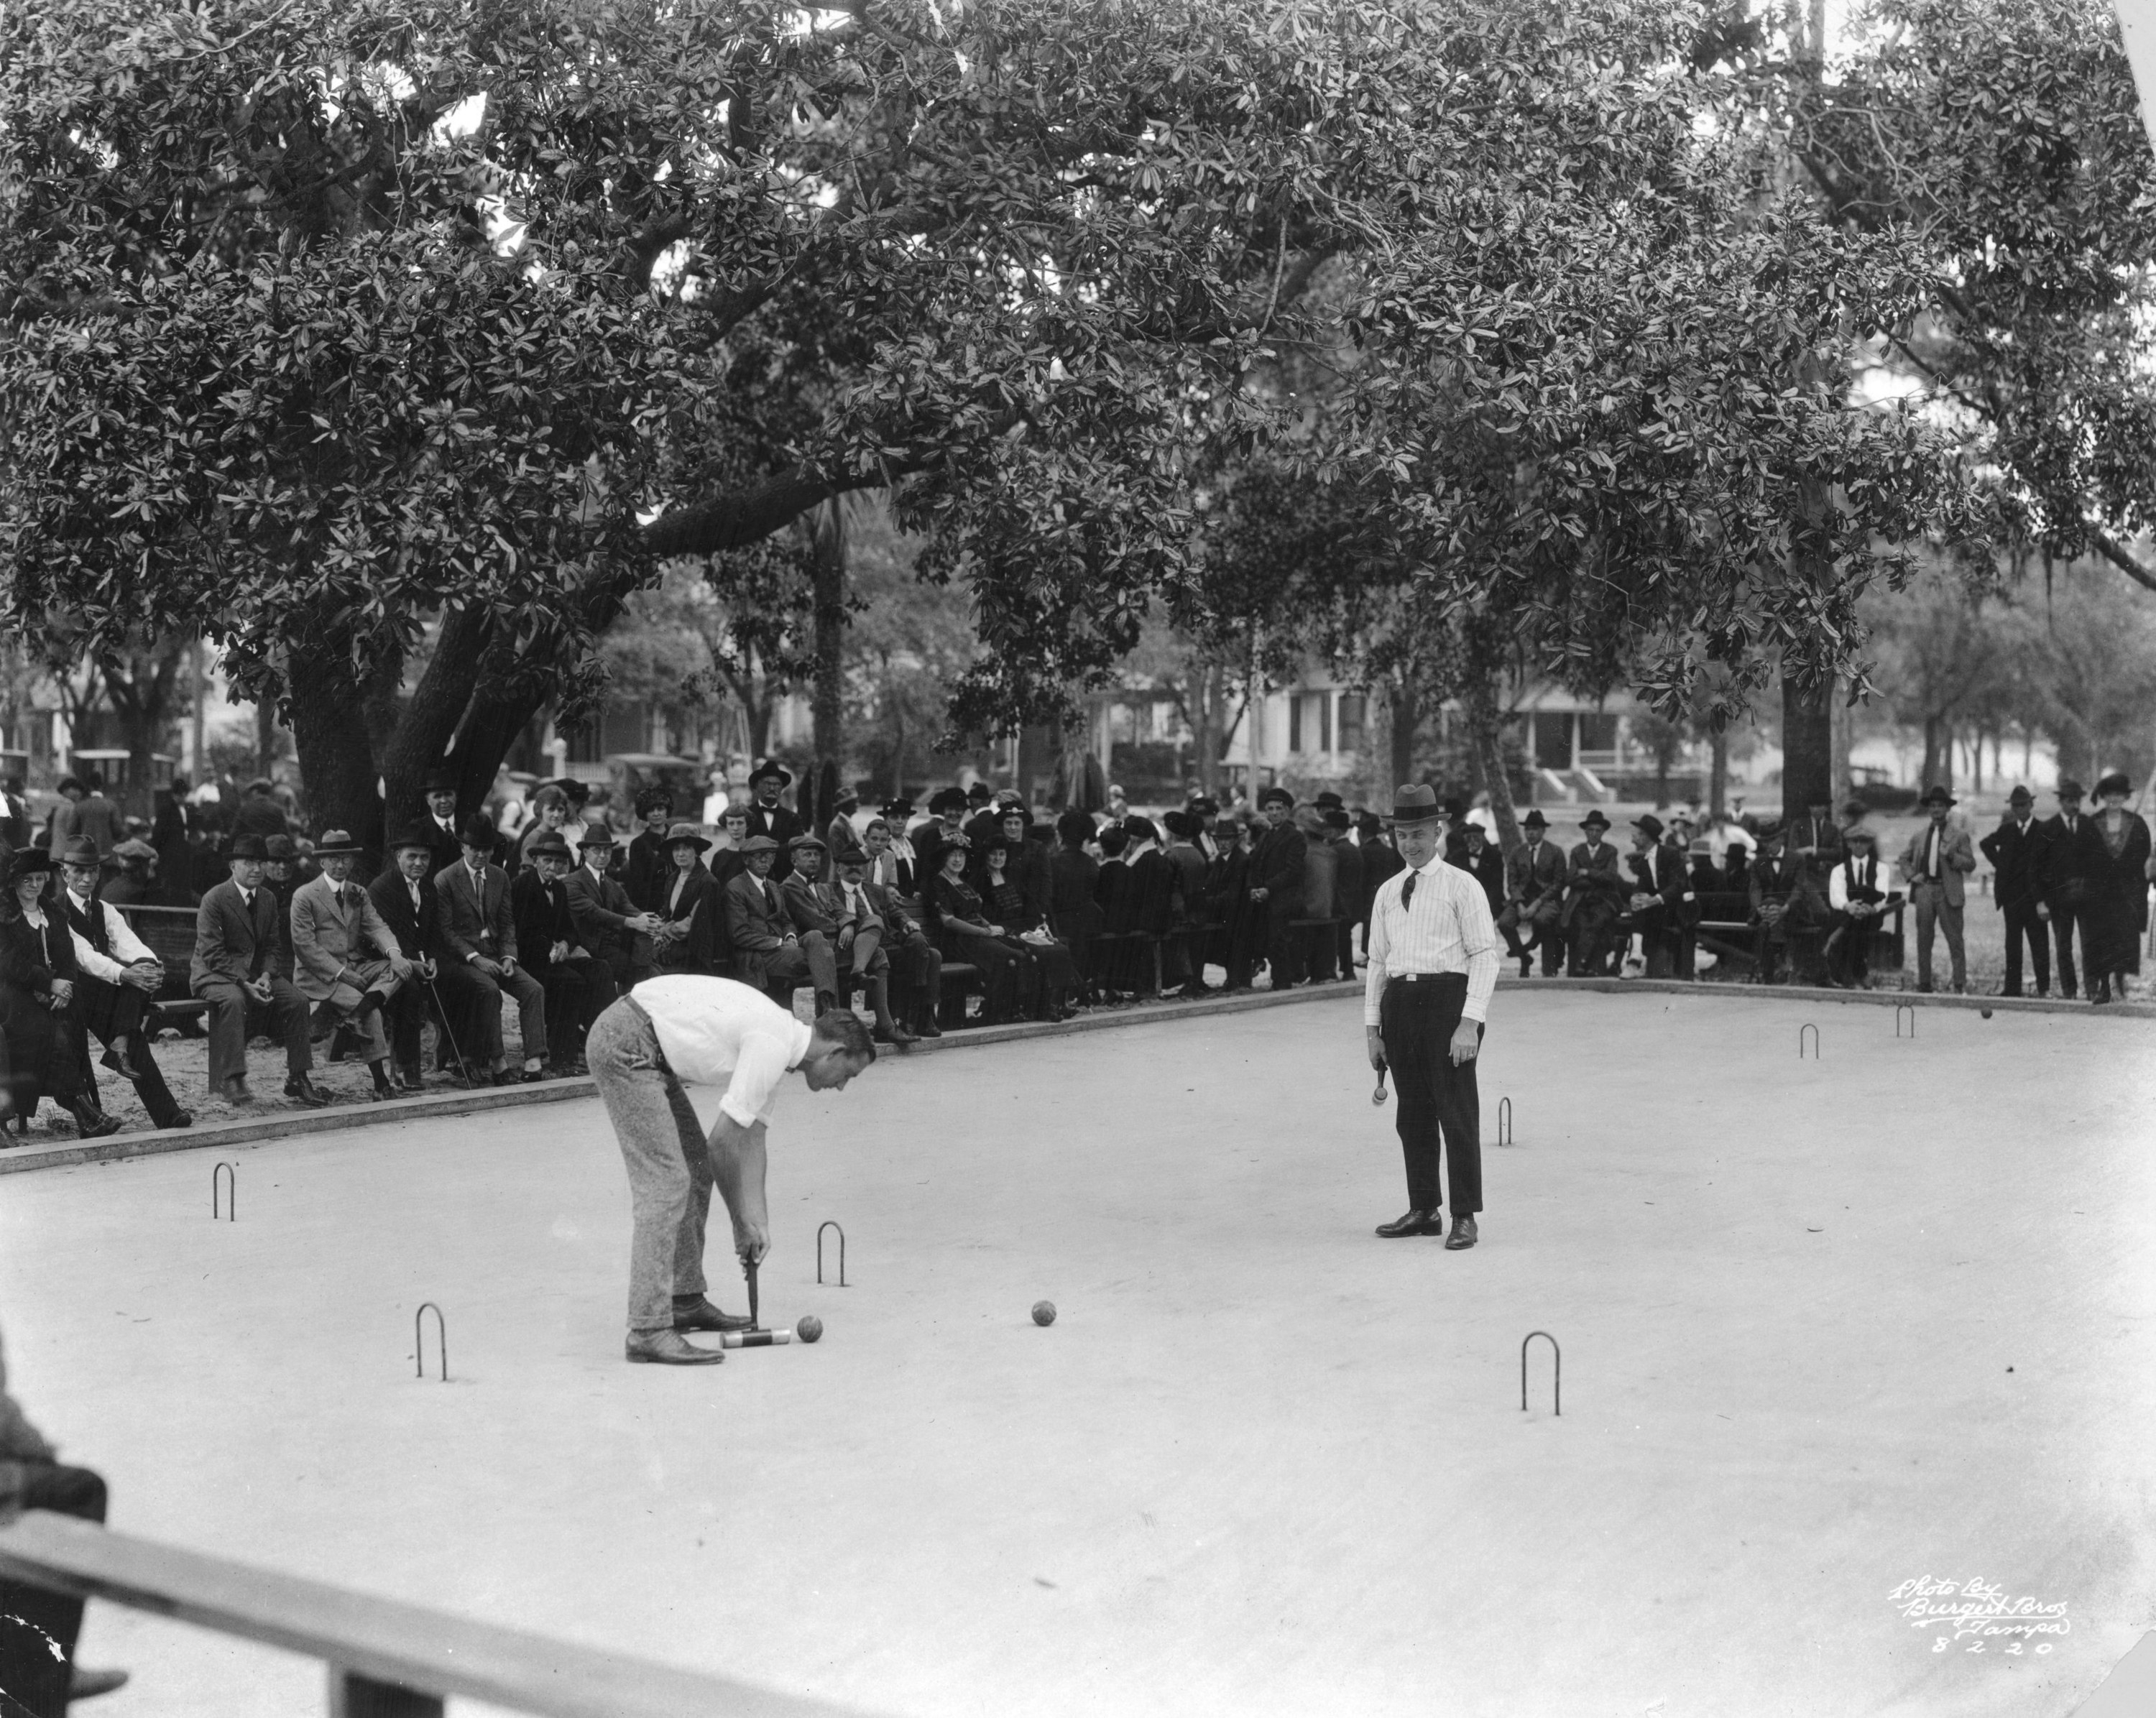 Two men playing on Roque platform